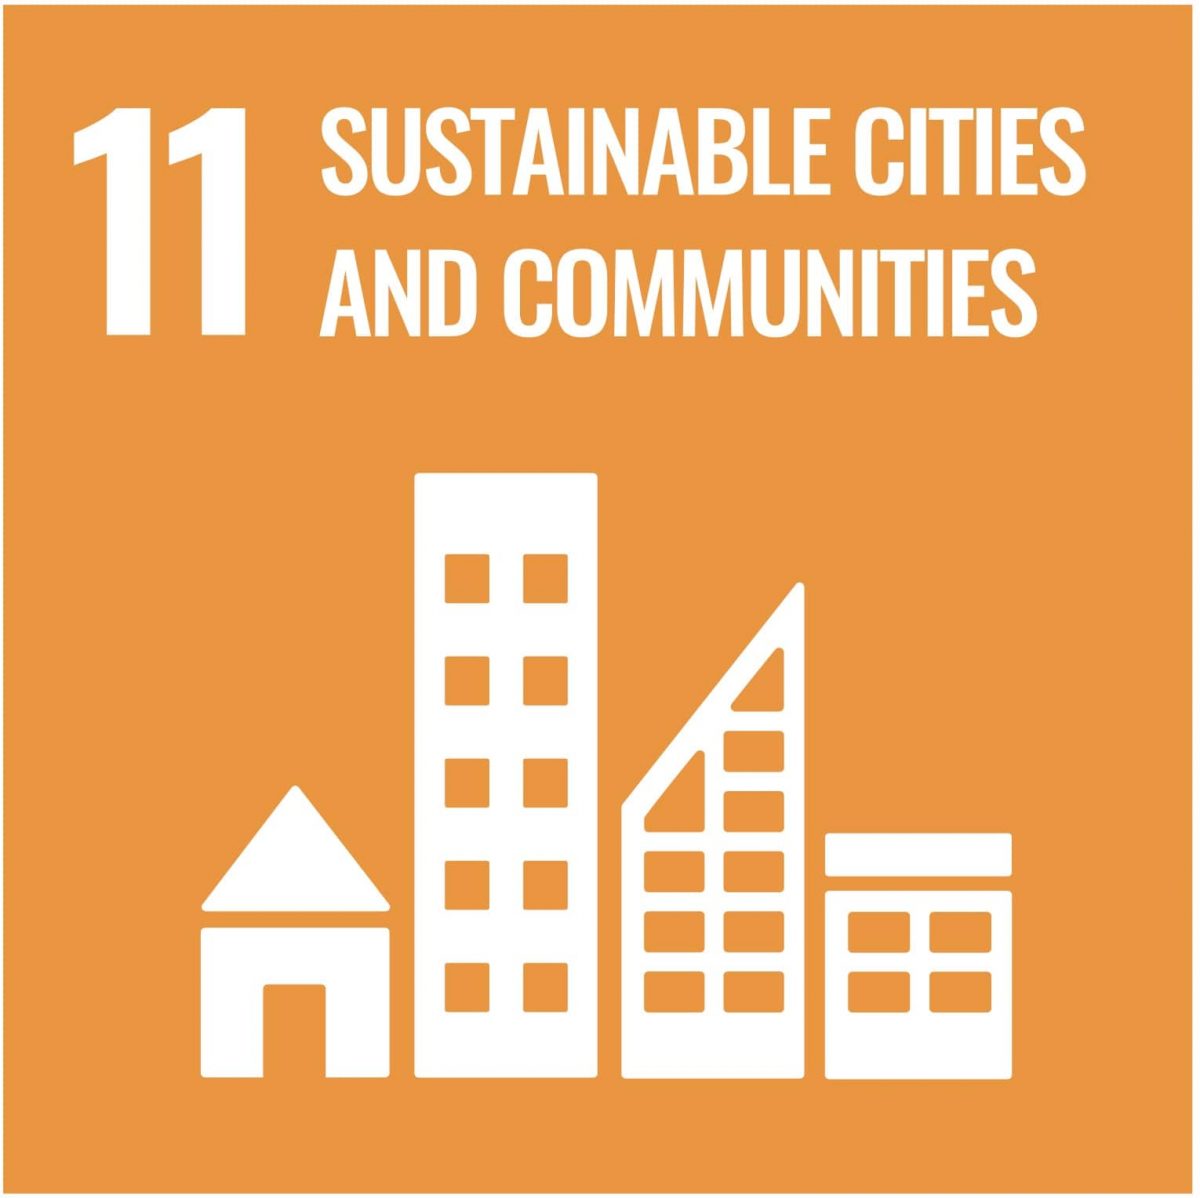 UN-Development-Goal-11-Sustainable-cities-communities-min-sustainable-goals